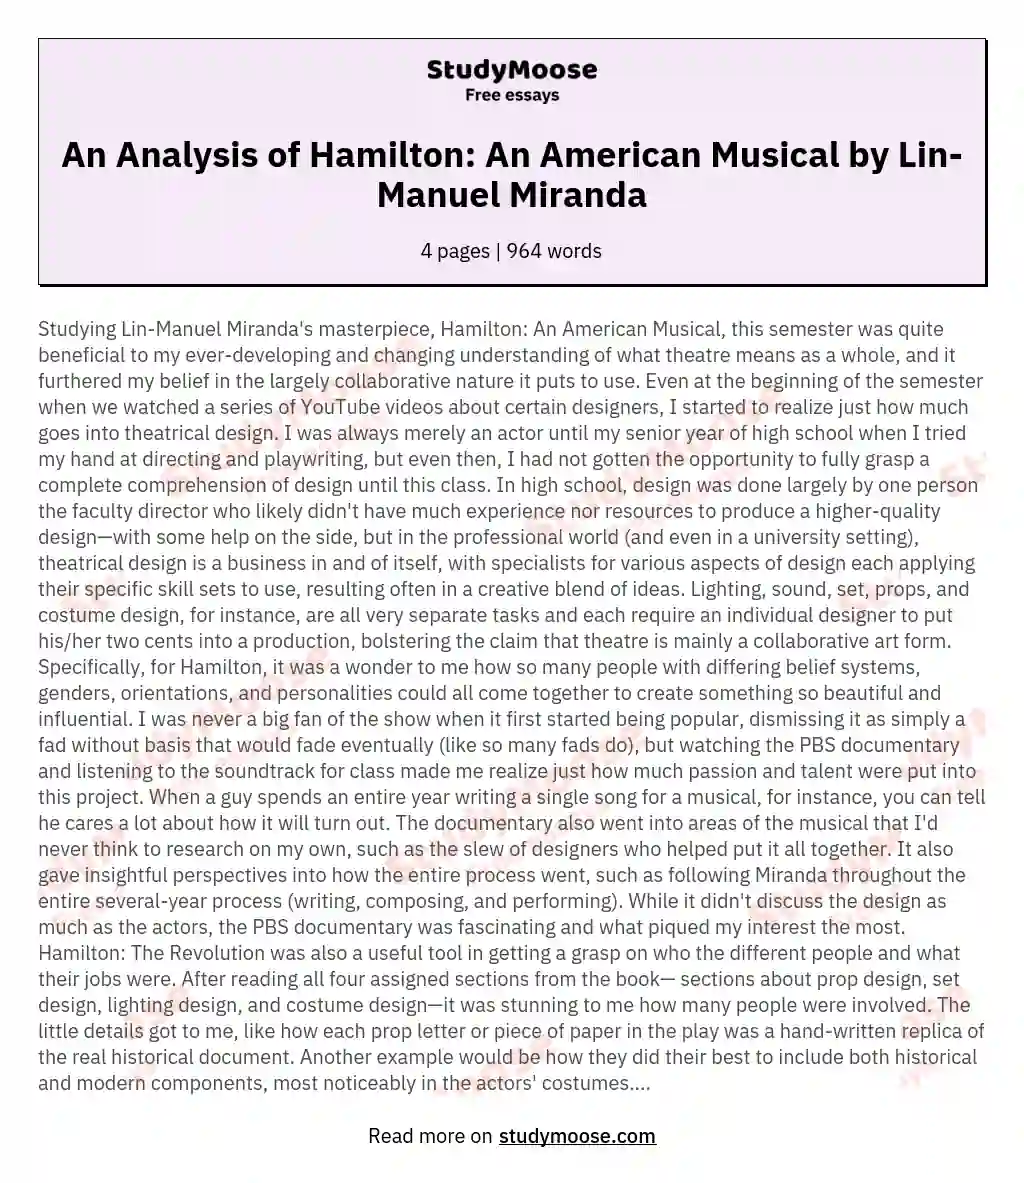 An Analysis of Hamilton: An American Musical by Lin-Manuel Miranda essay